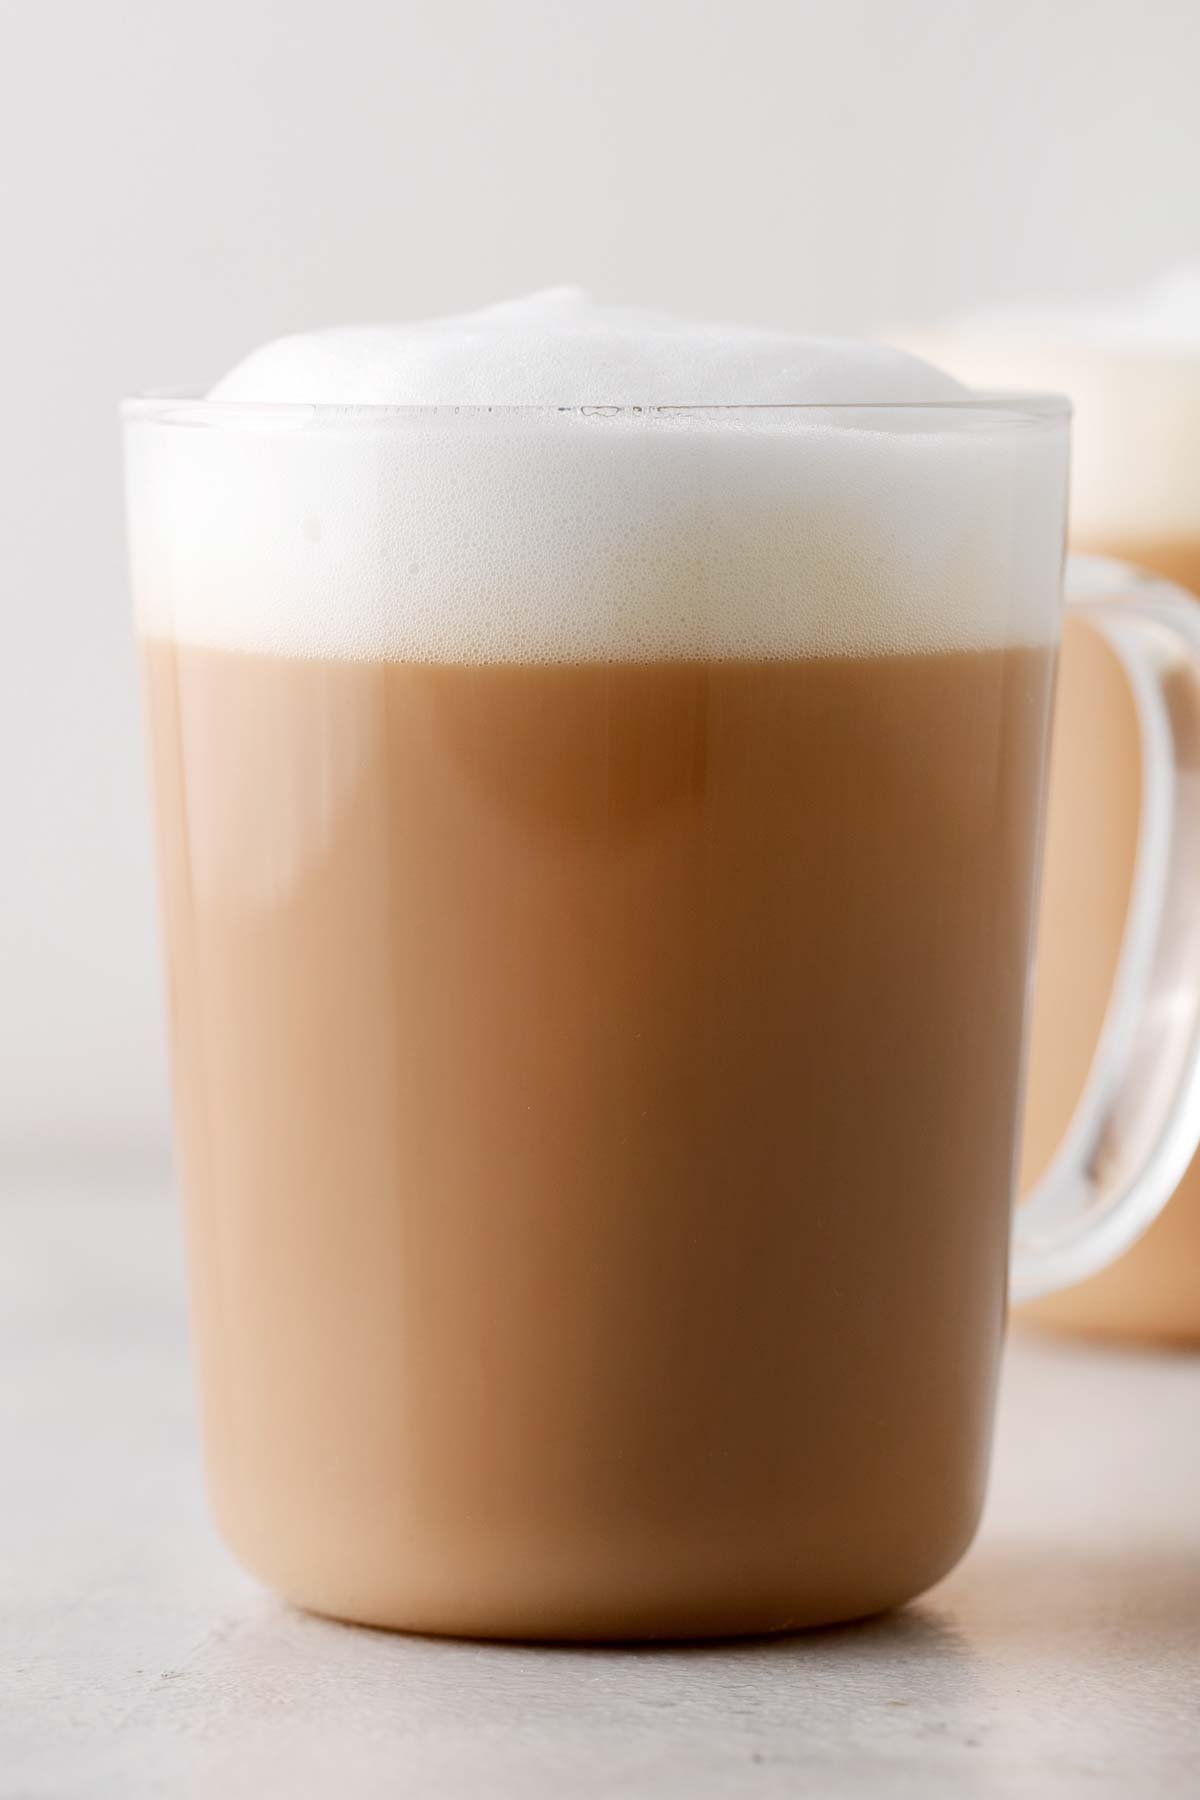 Starbucks Royal English Breakfast Tea Latte Copycat finished drink, in a clear mug with milk foam on top.